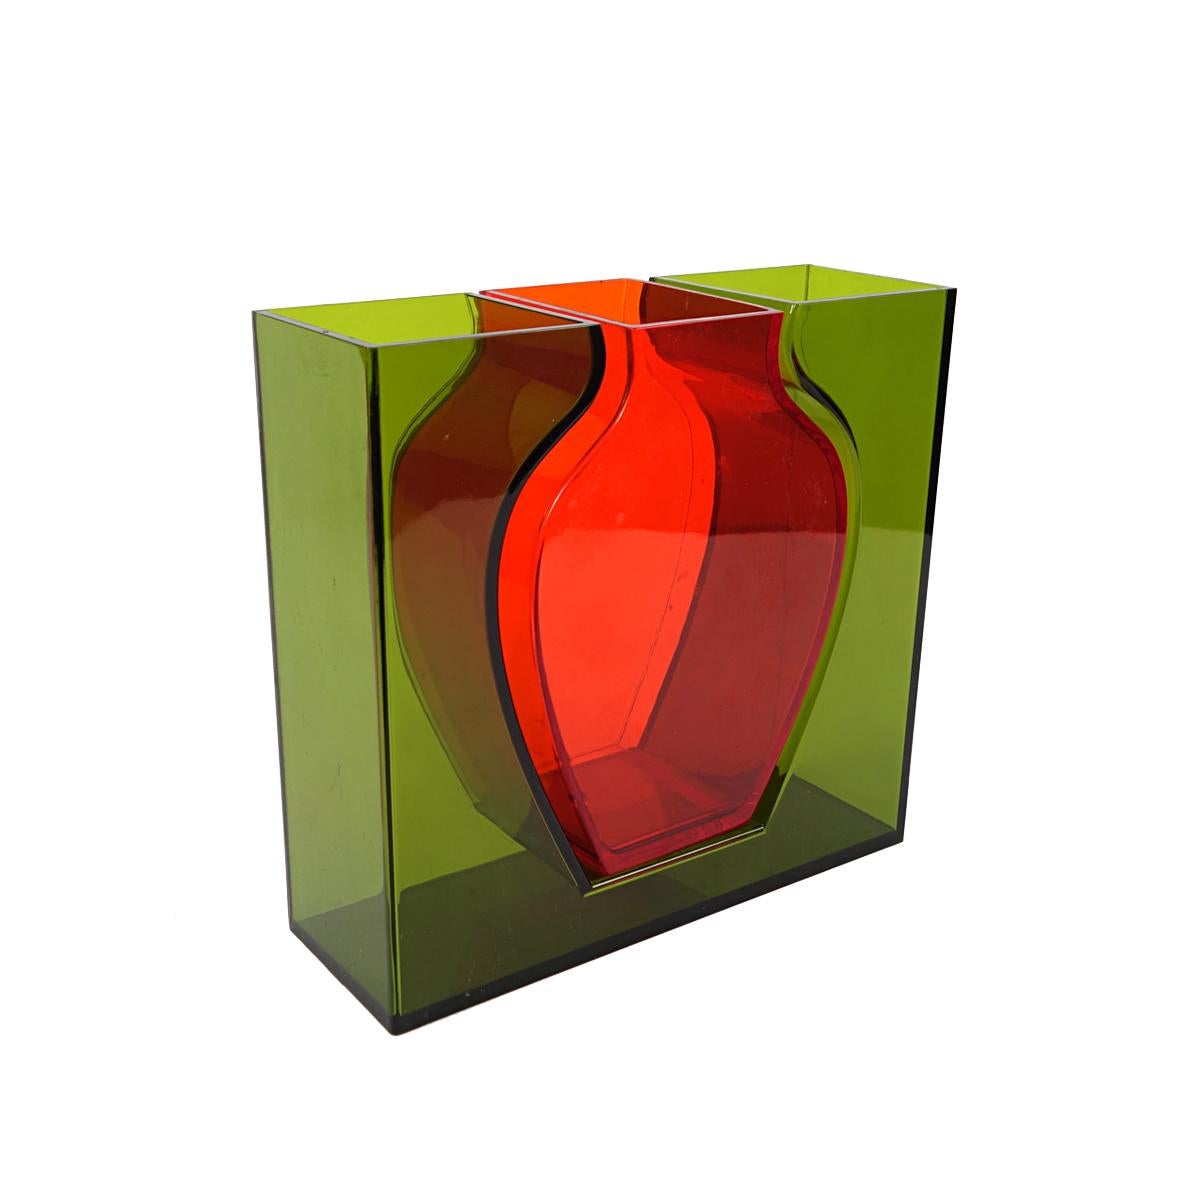 1990s Dutch Design Plexiglass Red Vase Within a Green Vase For Sale 2